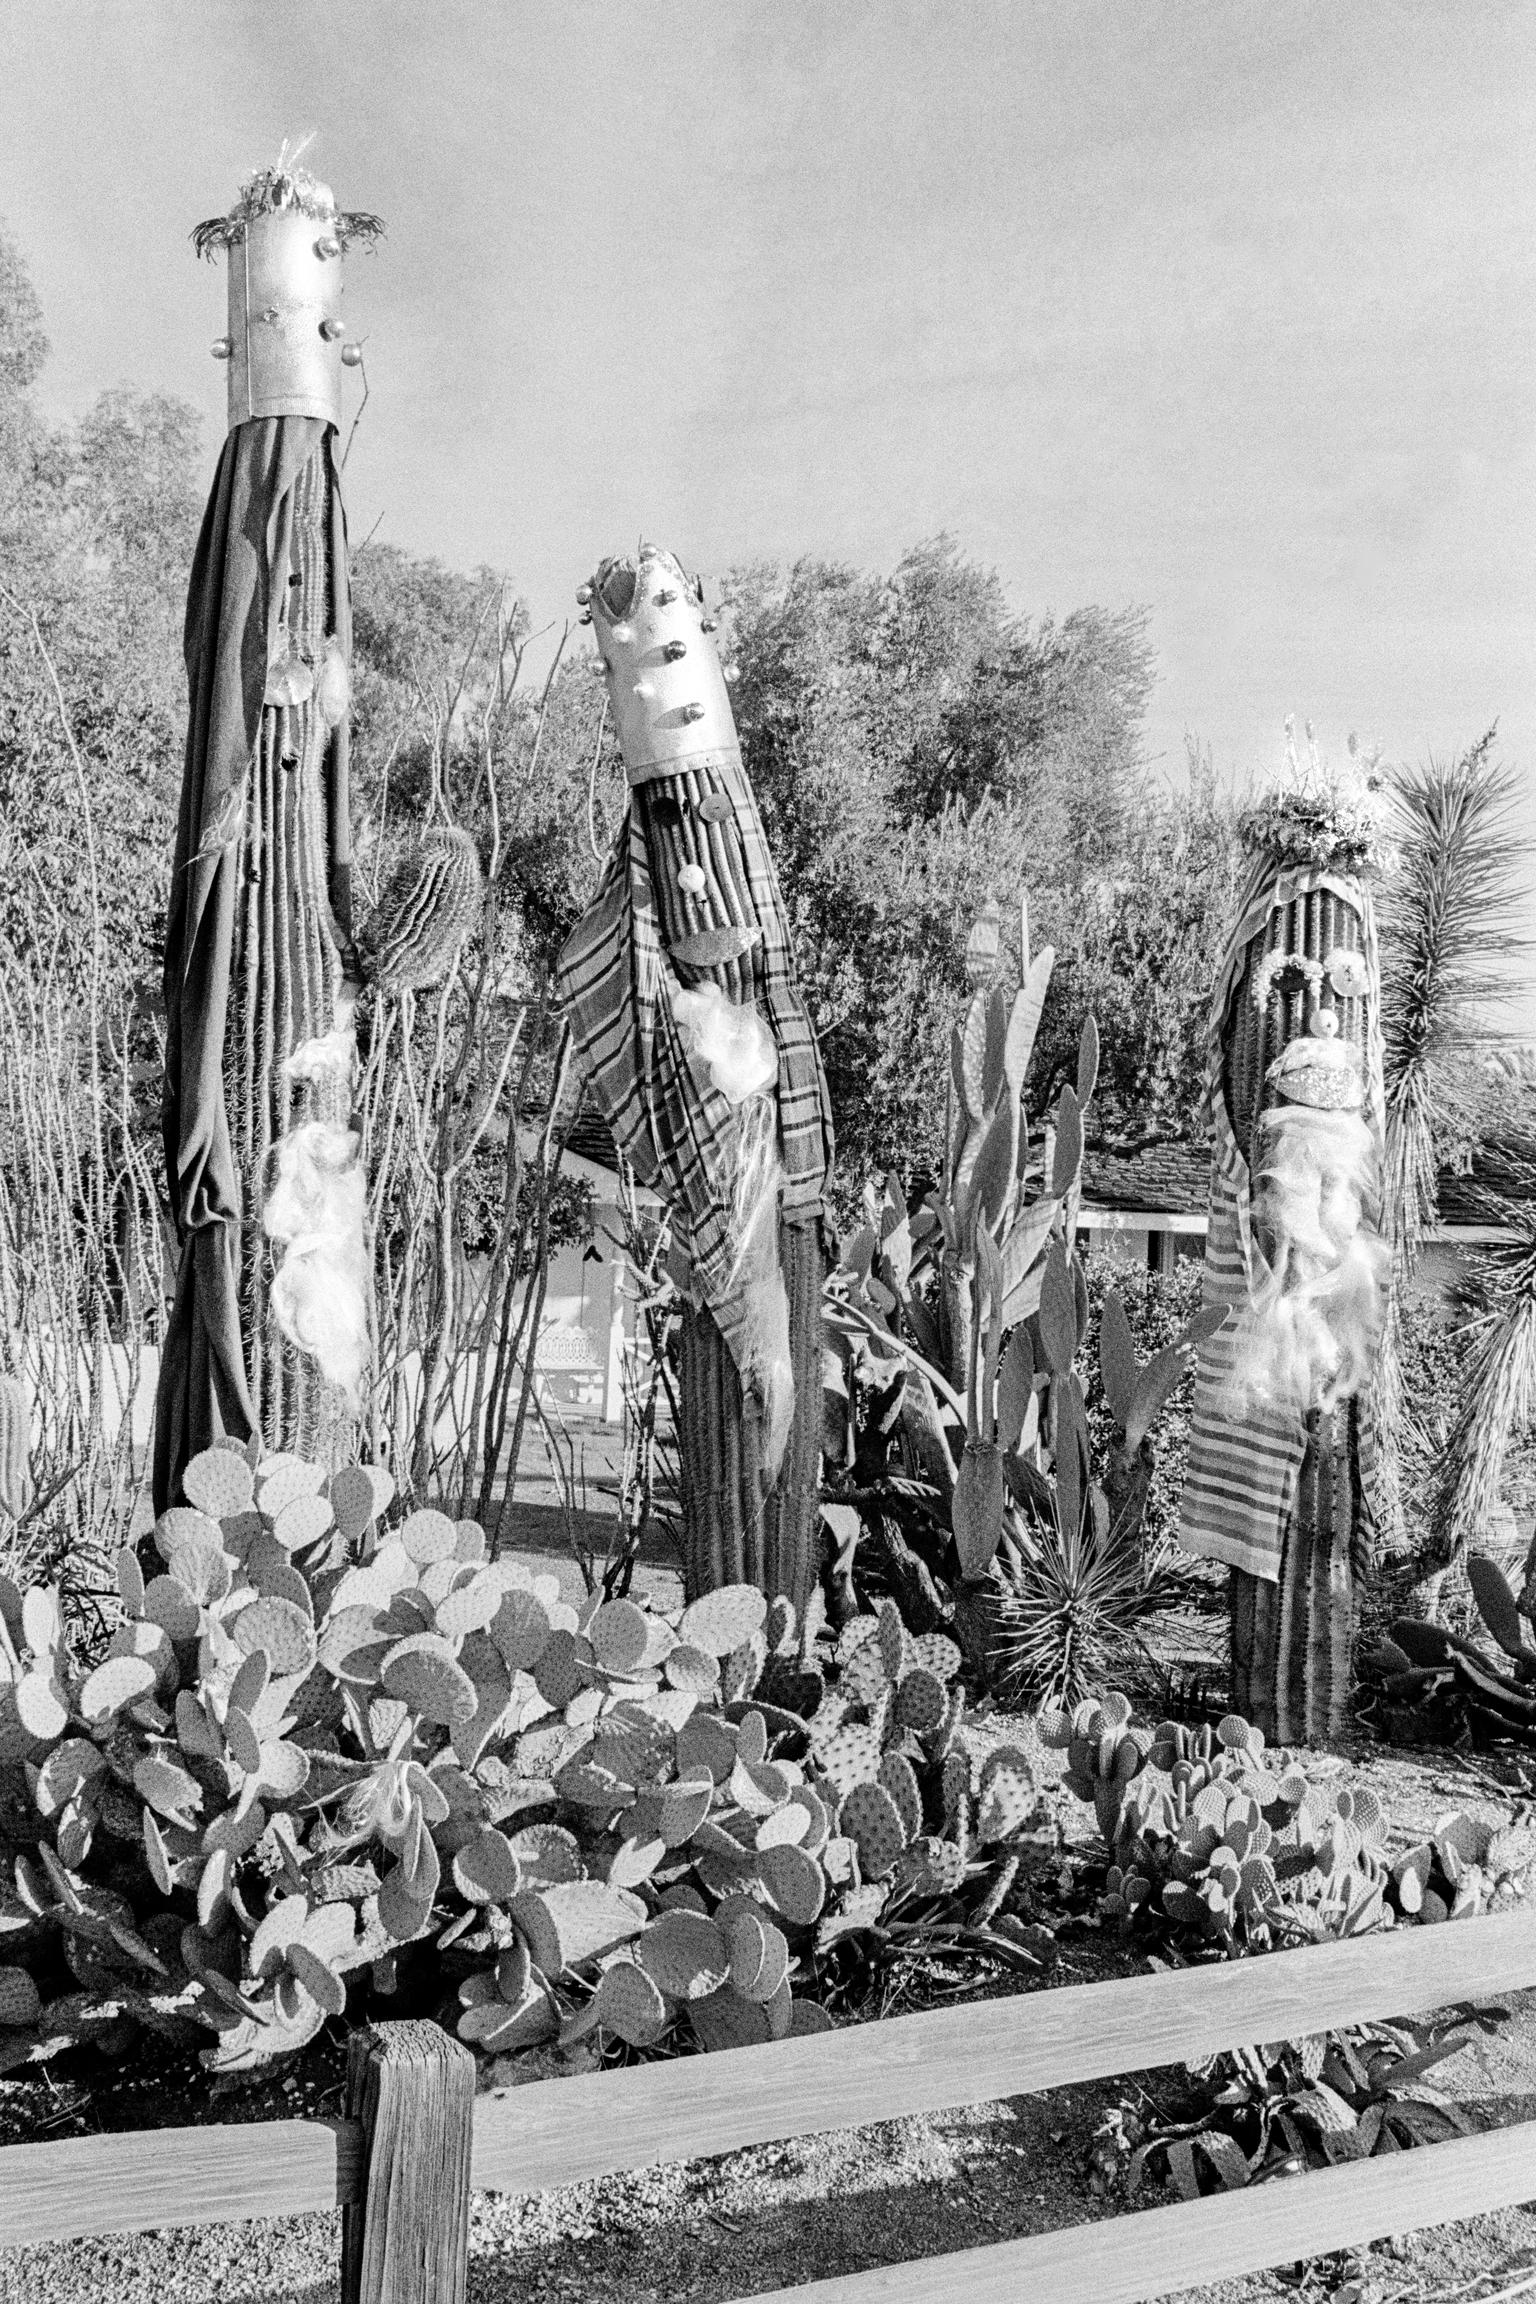 Phoenix desert garden. Cactus dressed up as Three Wise Men. Arizona USA